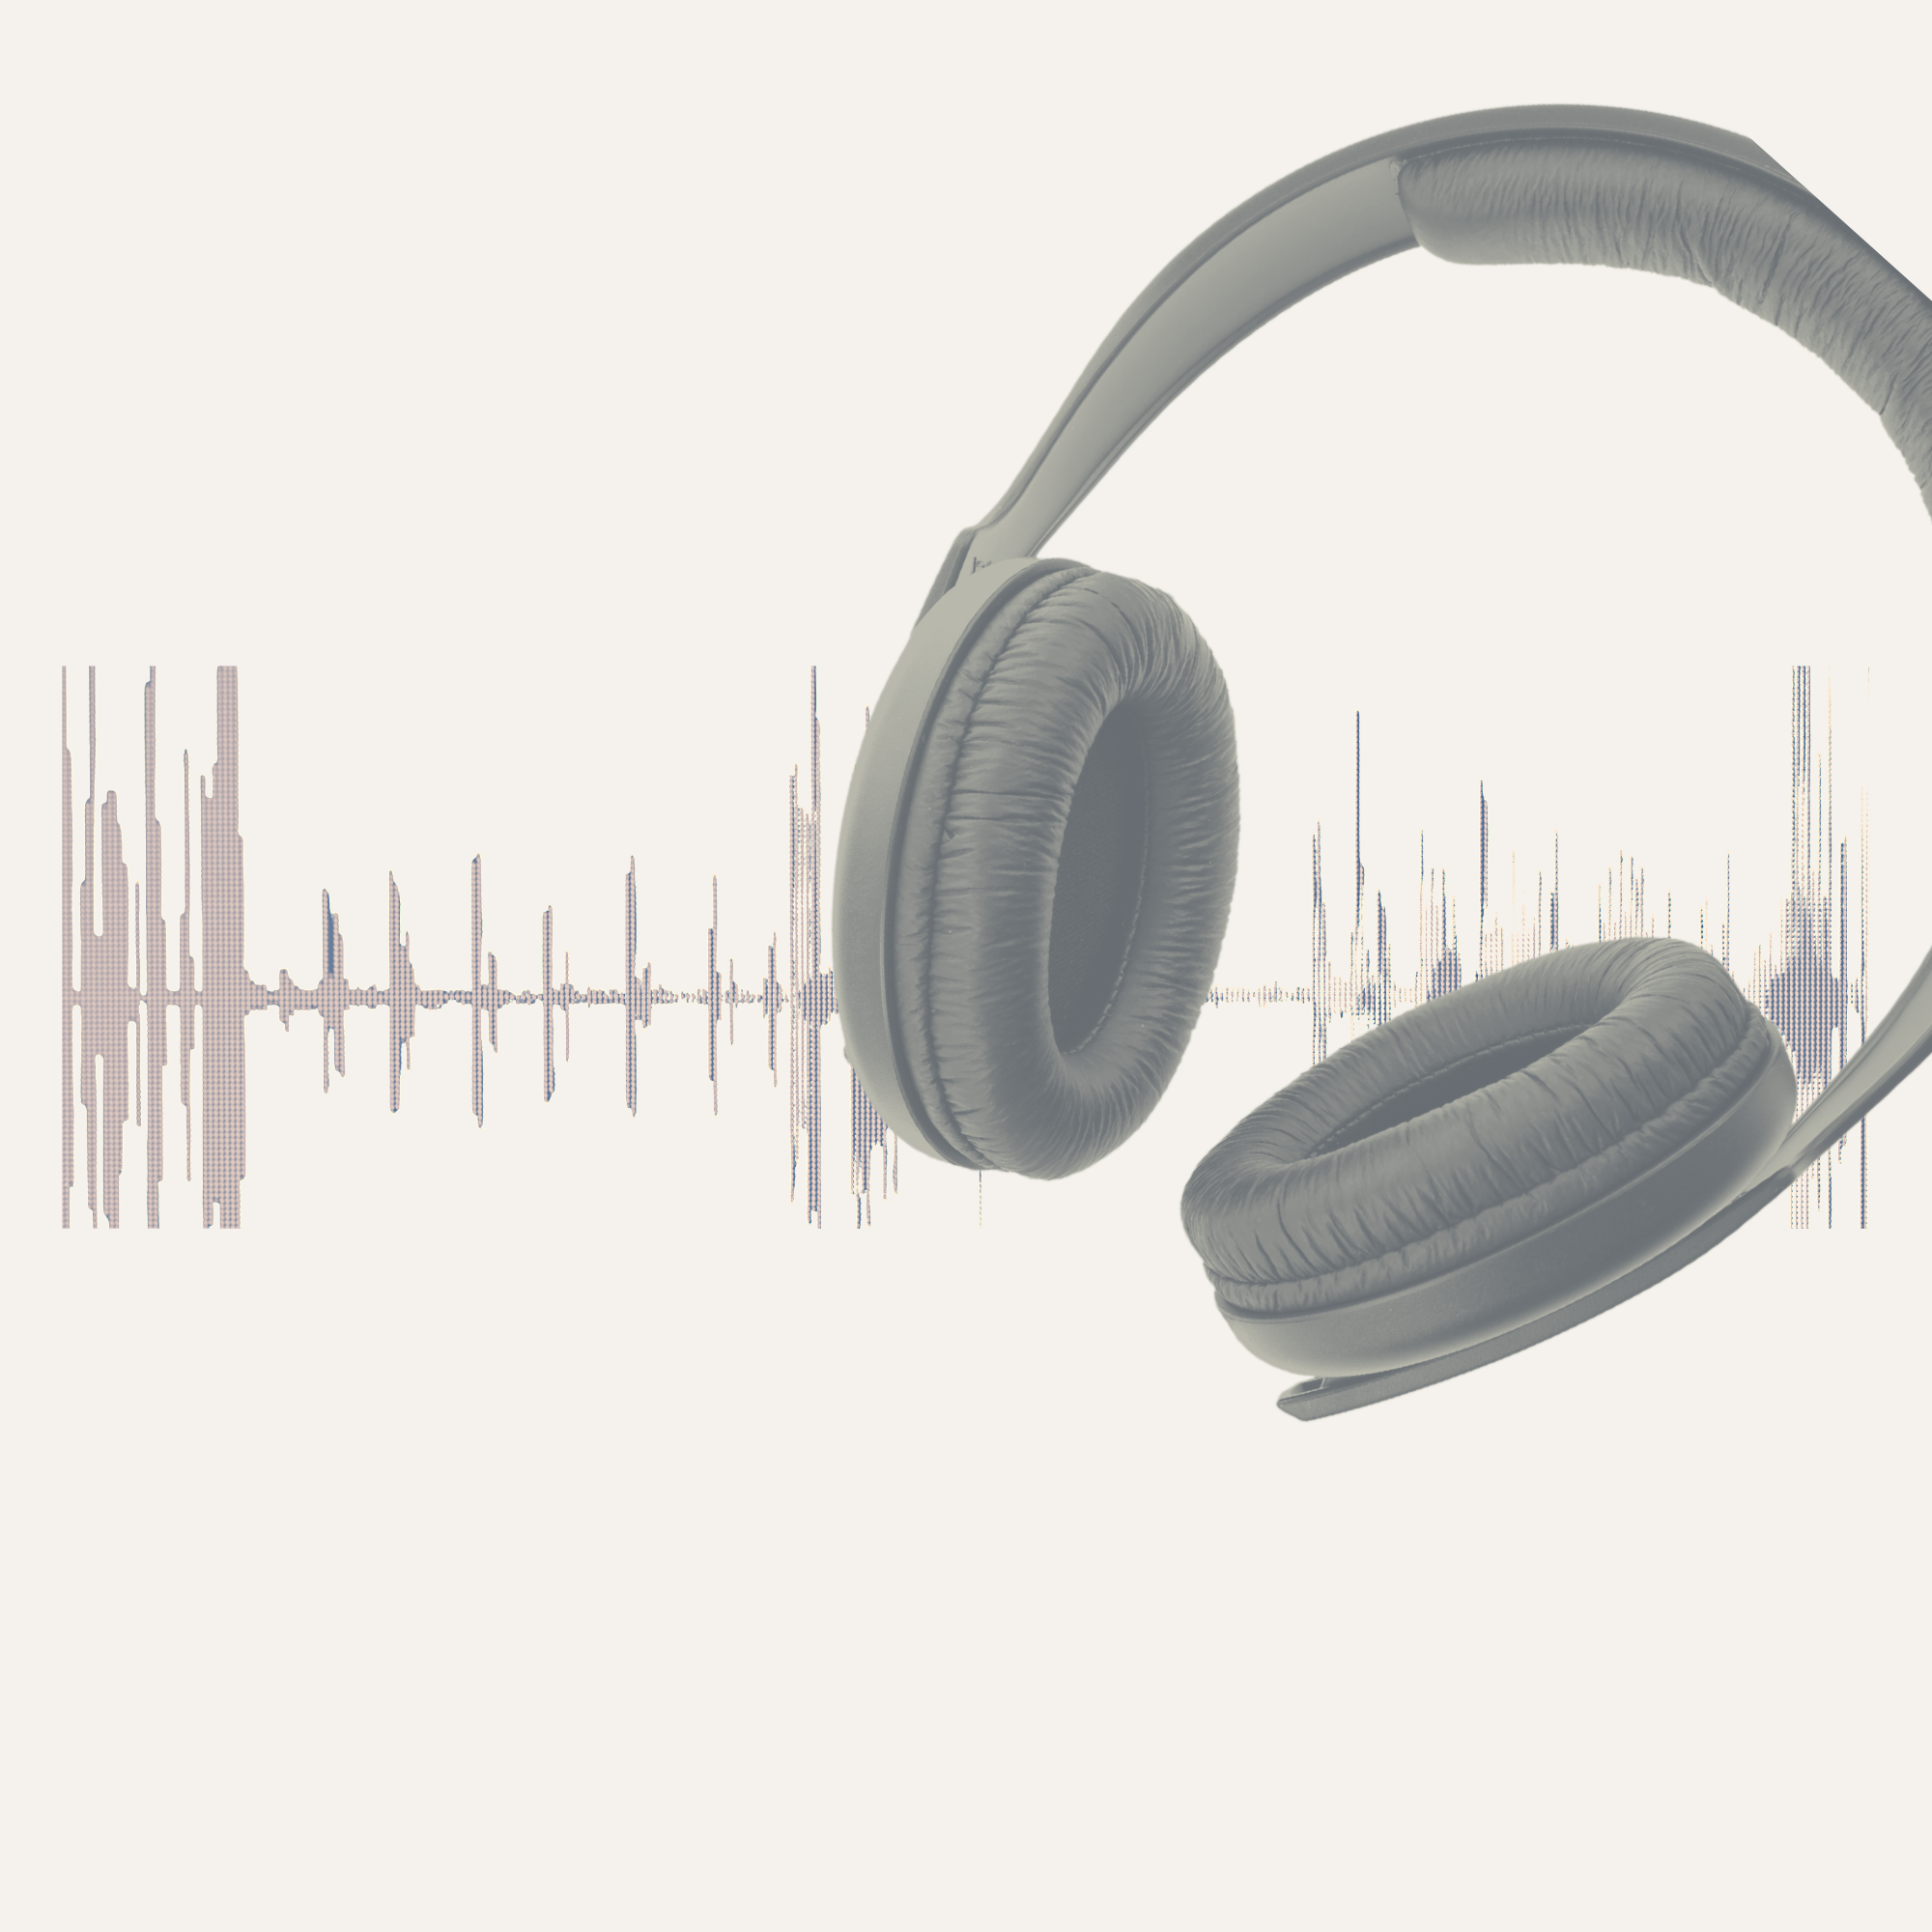 Entspannung per MP3. Audio mit Progressiver Muskelentspannung